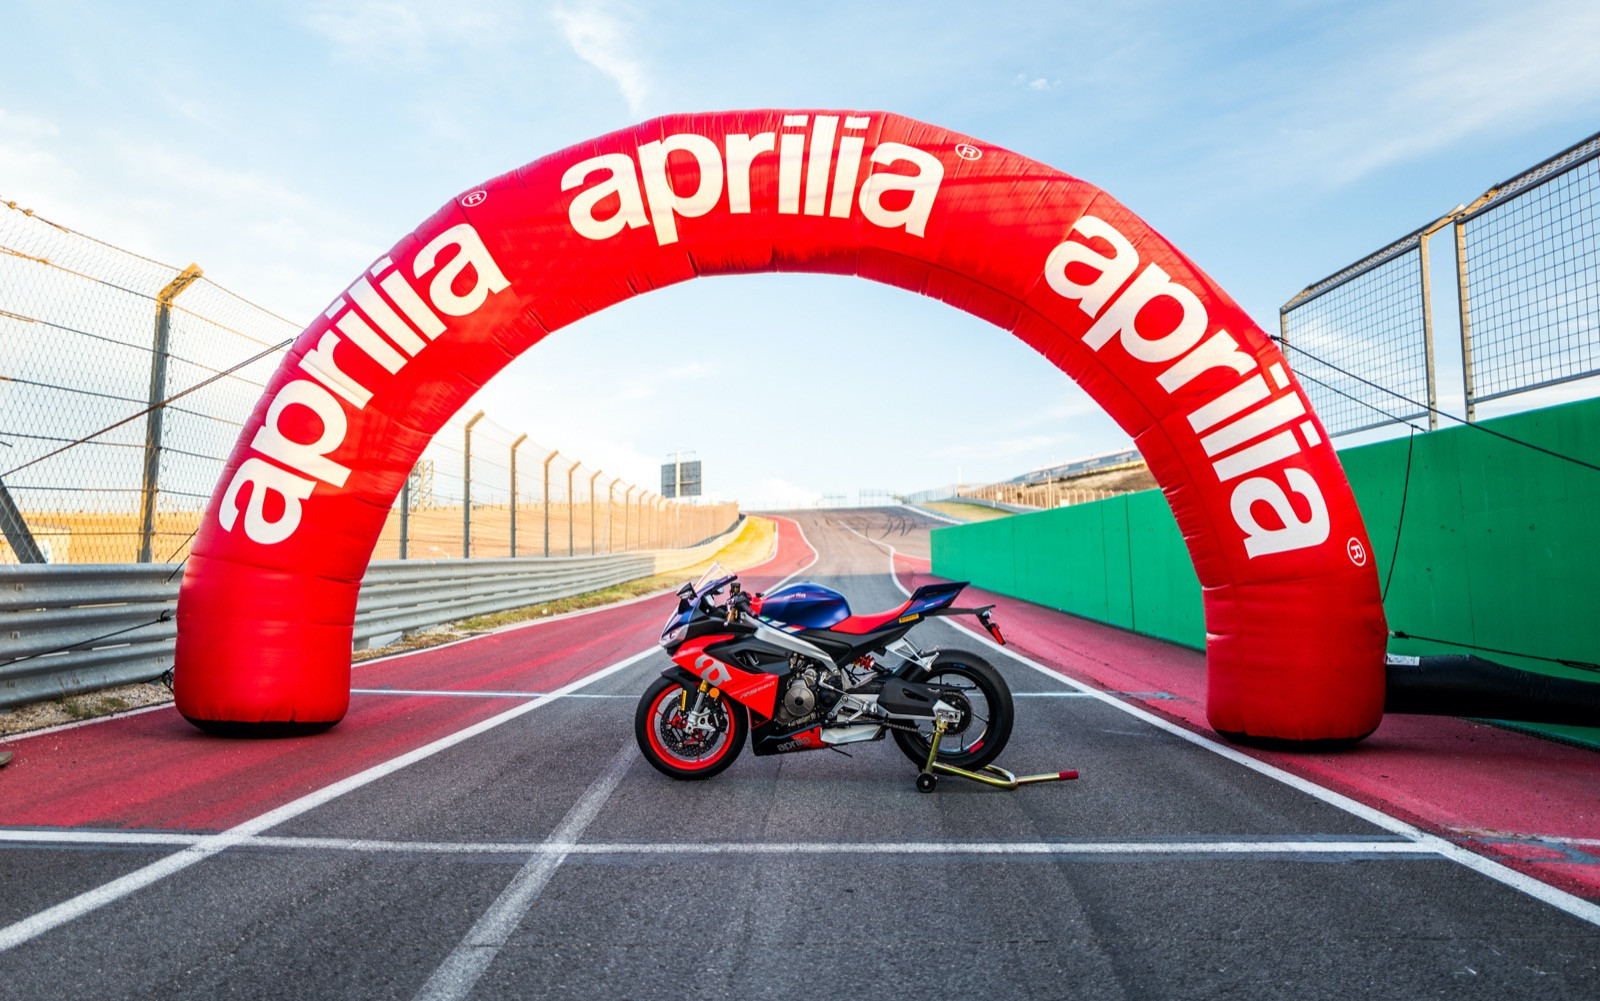 An Aprilia motorcycle on pit lane at Circuit of The Americas in 2021. Photo courtesy Aprilia.